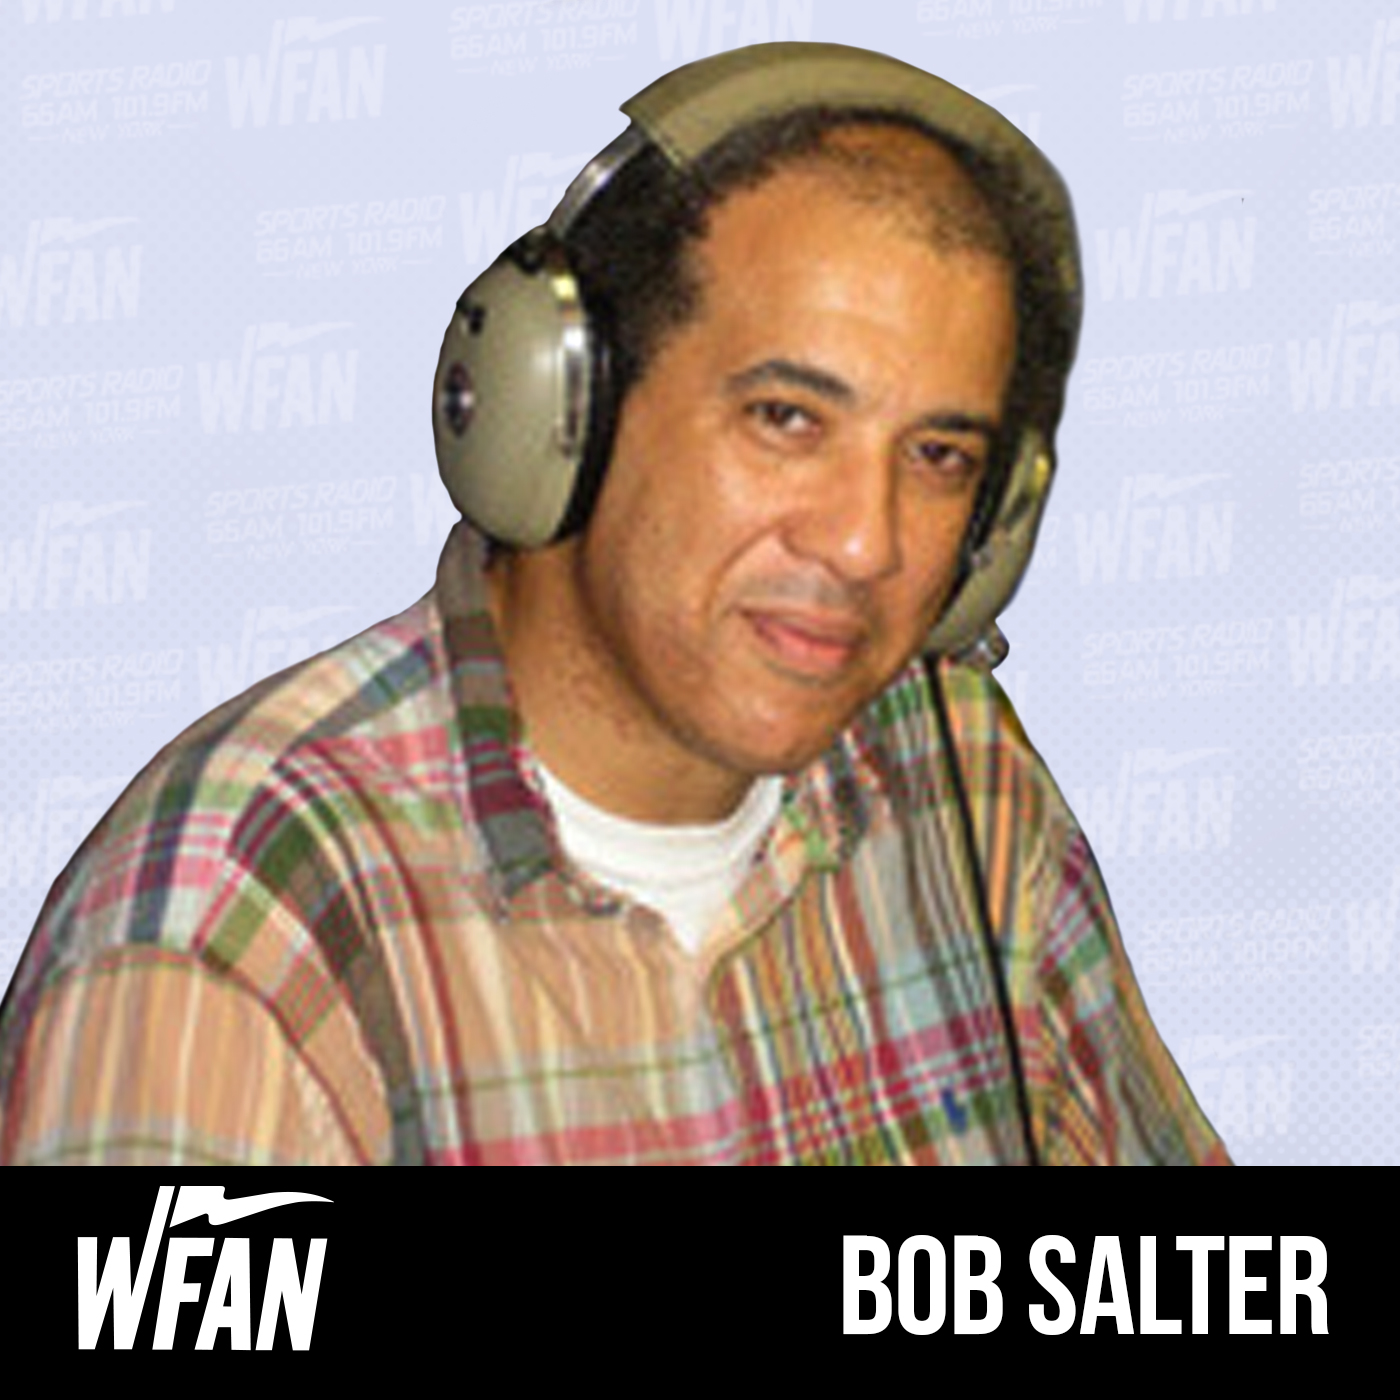 Bob Salter PSA Program 1-10-20 Hour 2